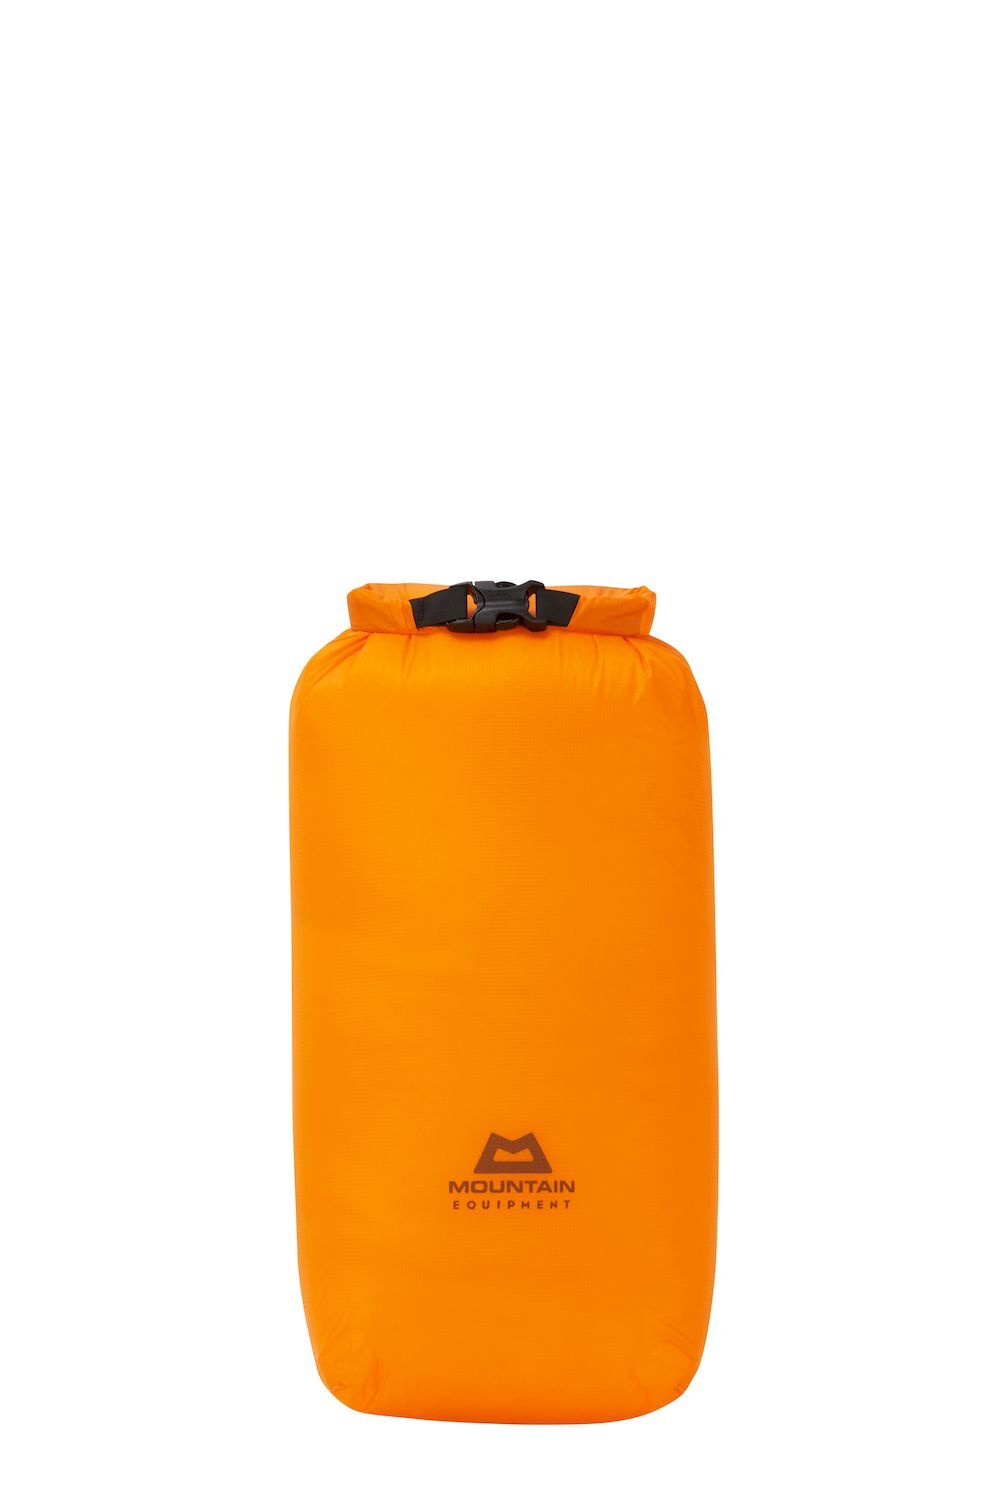 Mountain Equipment Lightweight Drybag 5L - Bolsa impermeable